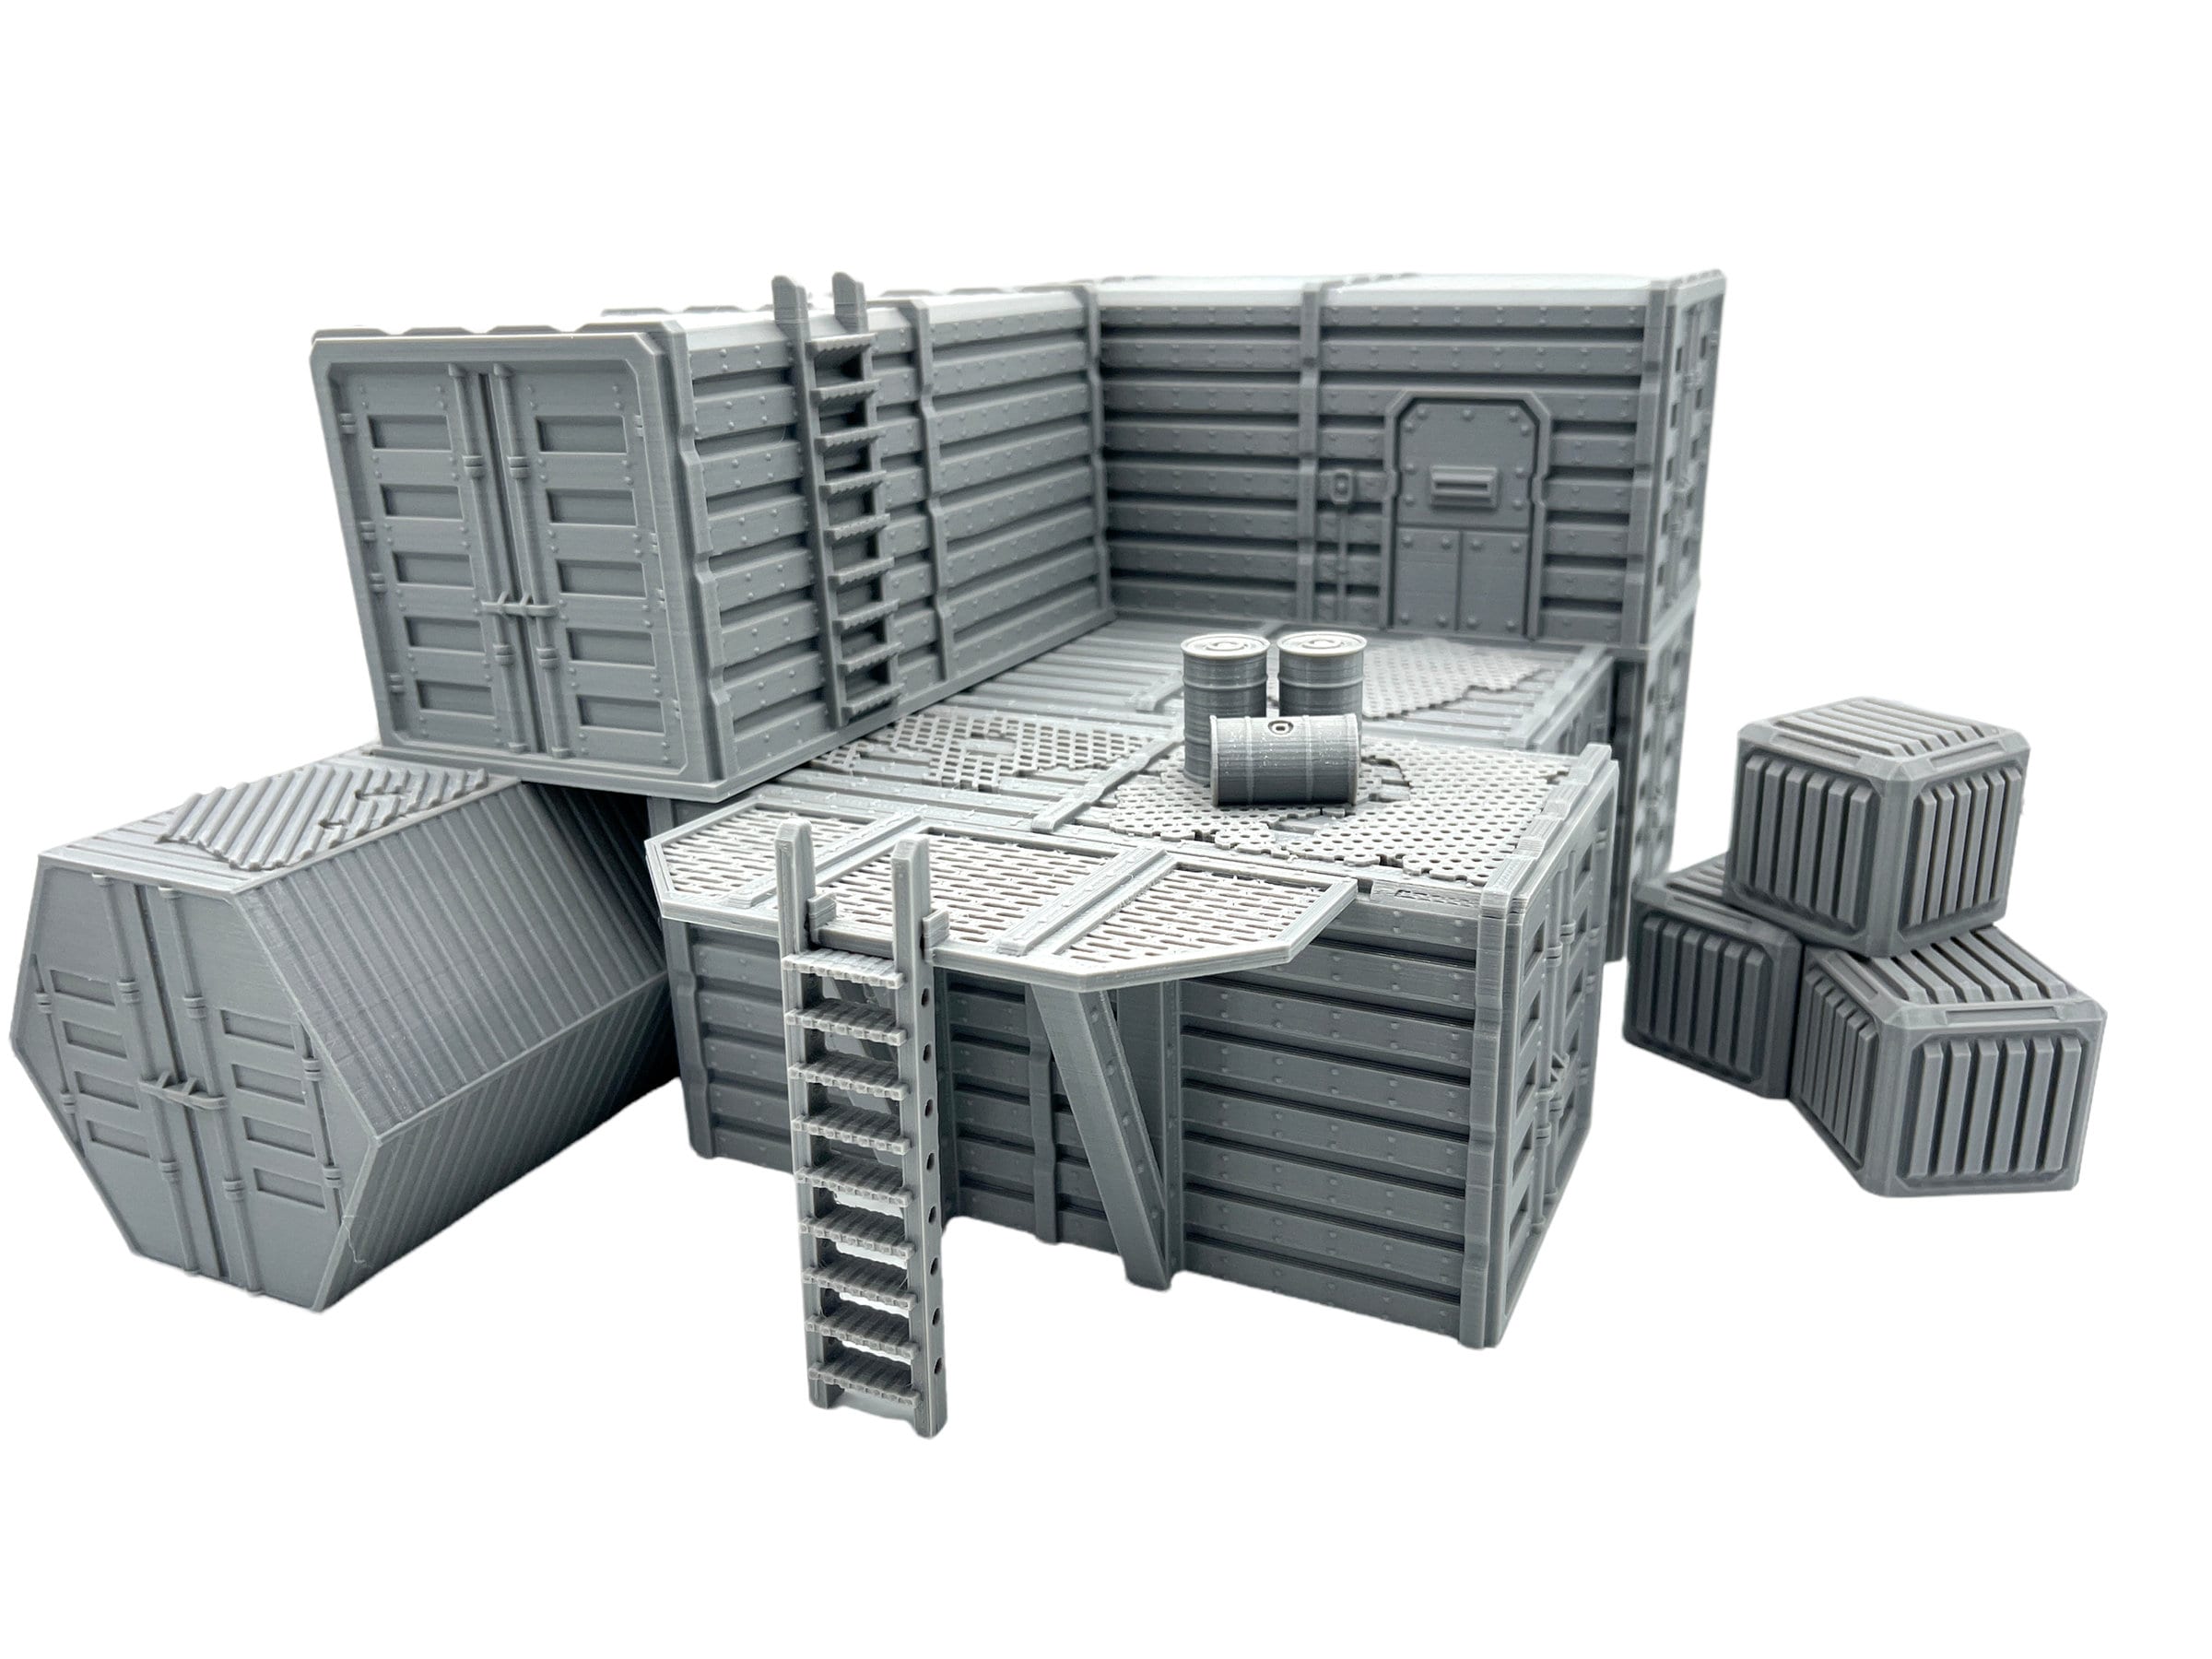 City Docks Container Stack 4 / Sacrusmundus / 40k / Legion / Shatterpoint / 3d Printed Tabletop Terrain / Licensed Printer